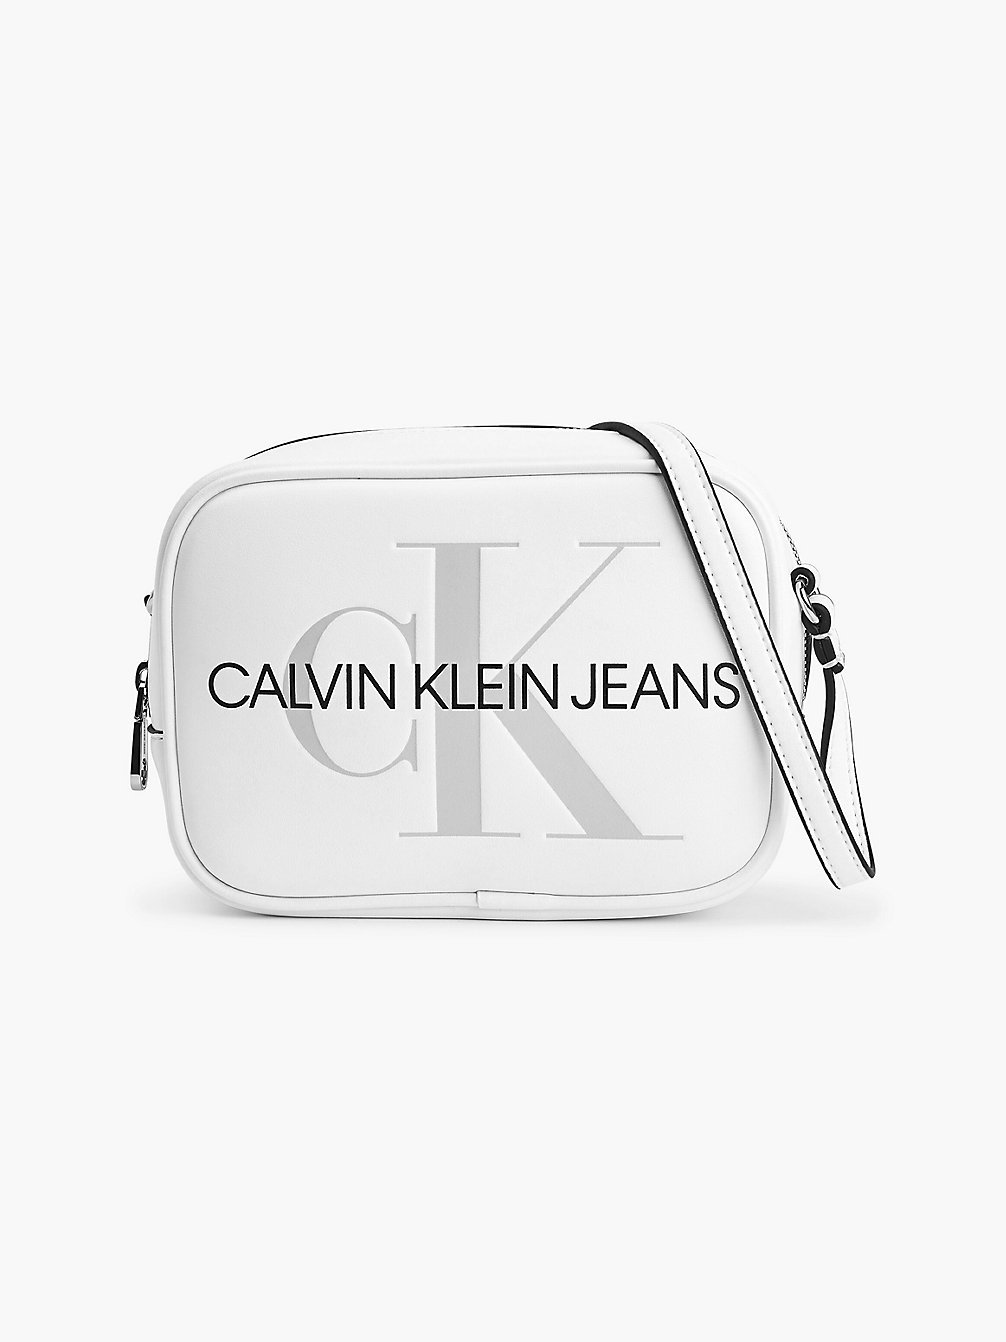 BRIGHT WHITE > Crossover > undefined dames - Calvin Klein